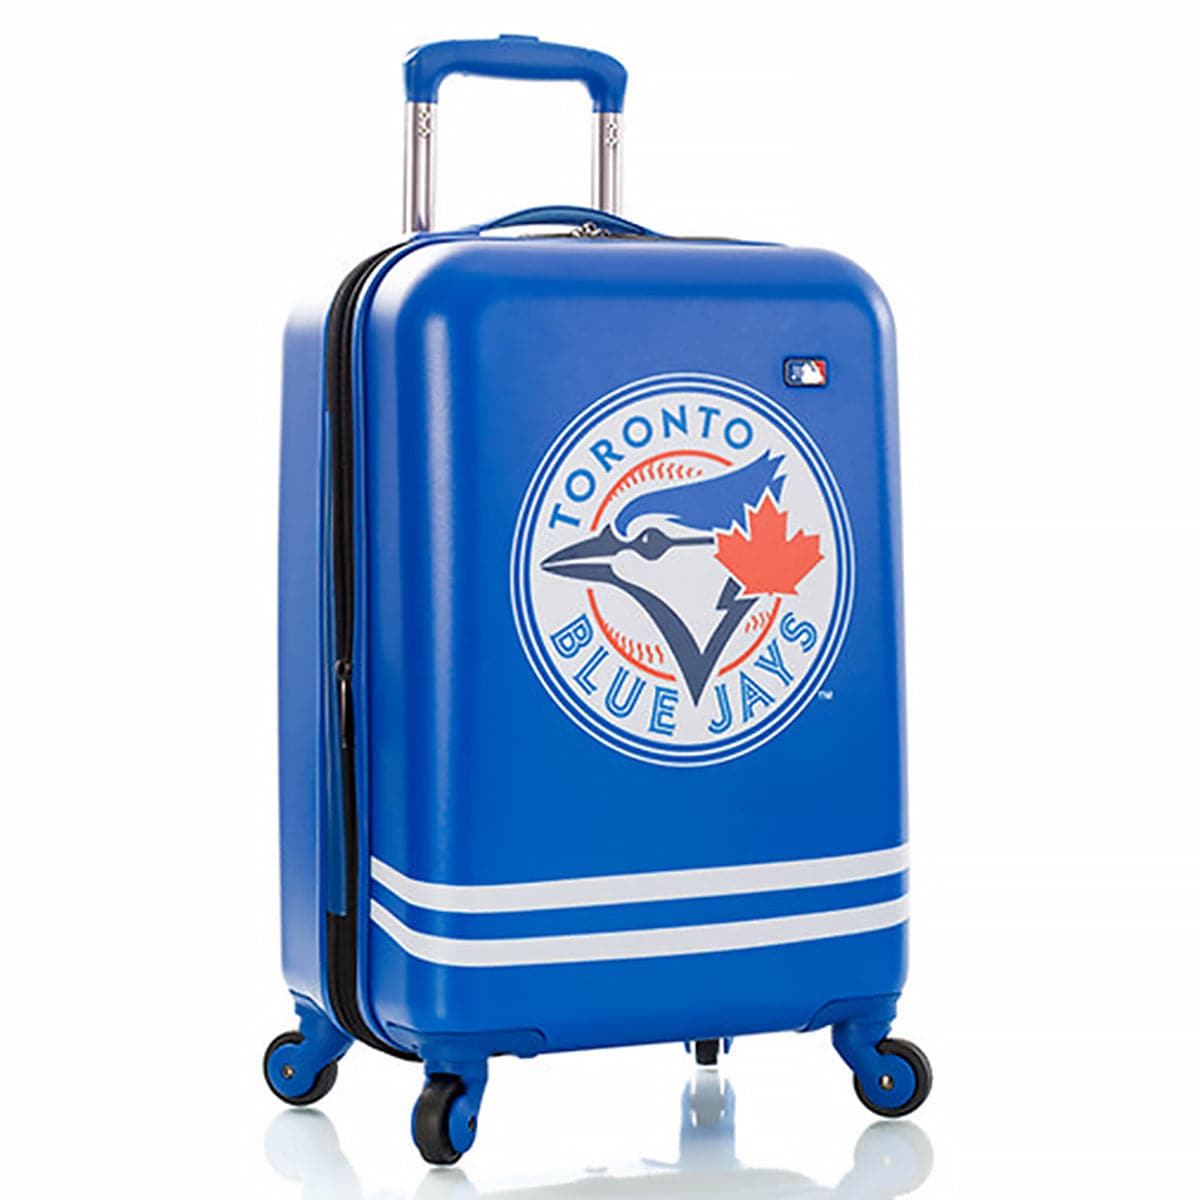 Heys Major League Sports 2 Piece Luggage Set